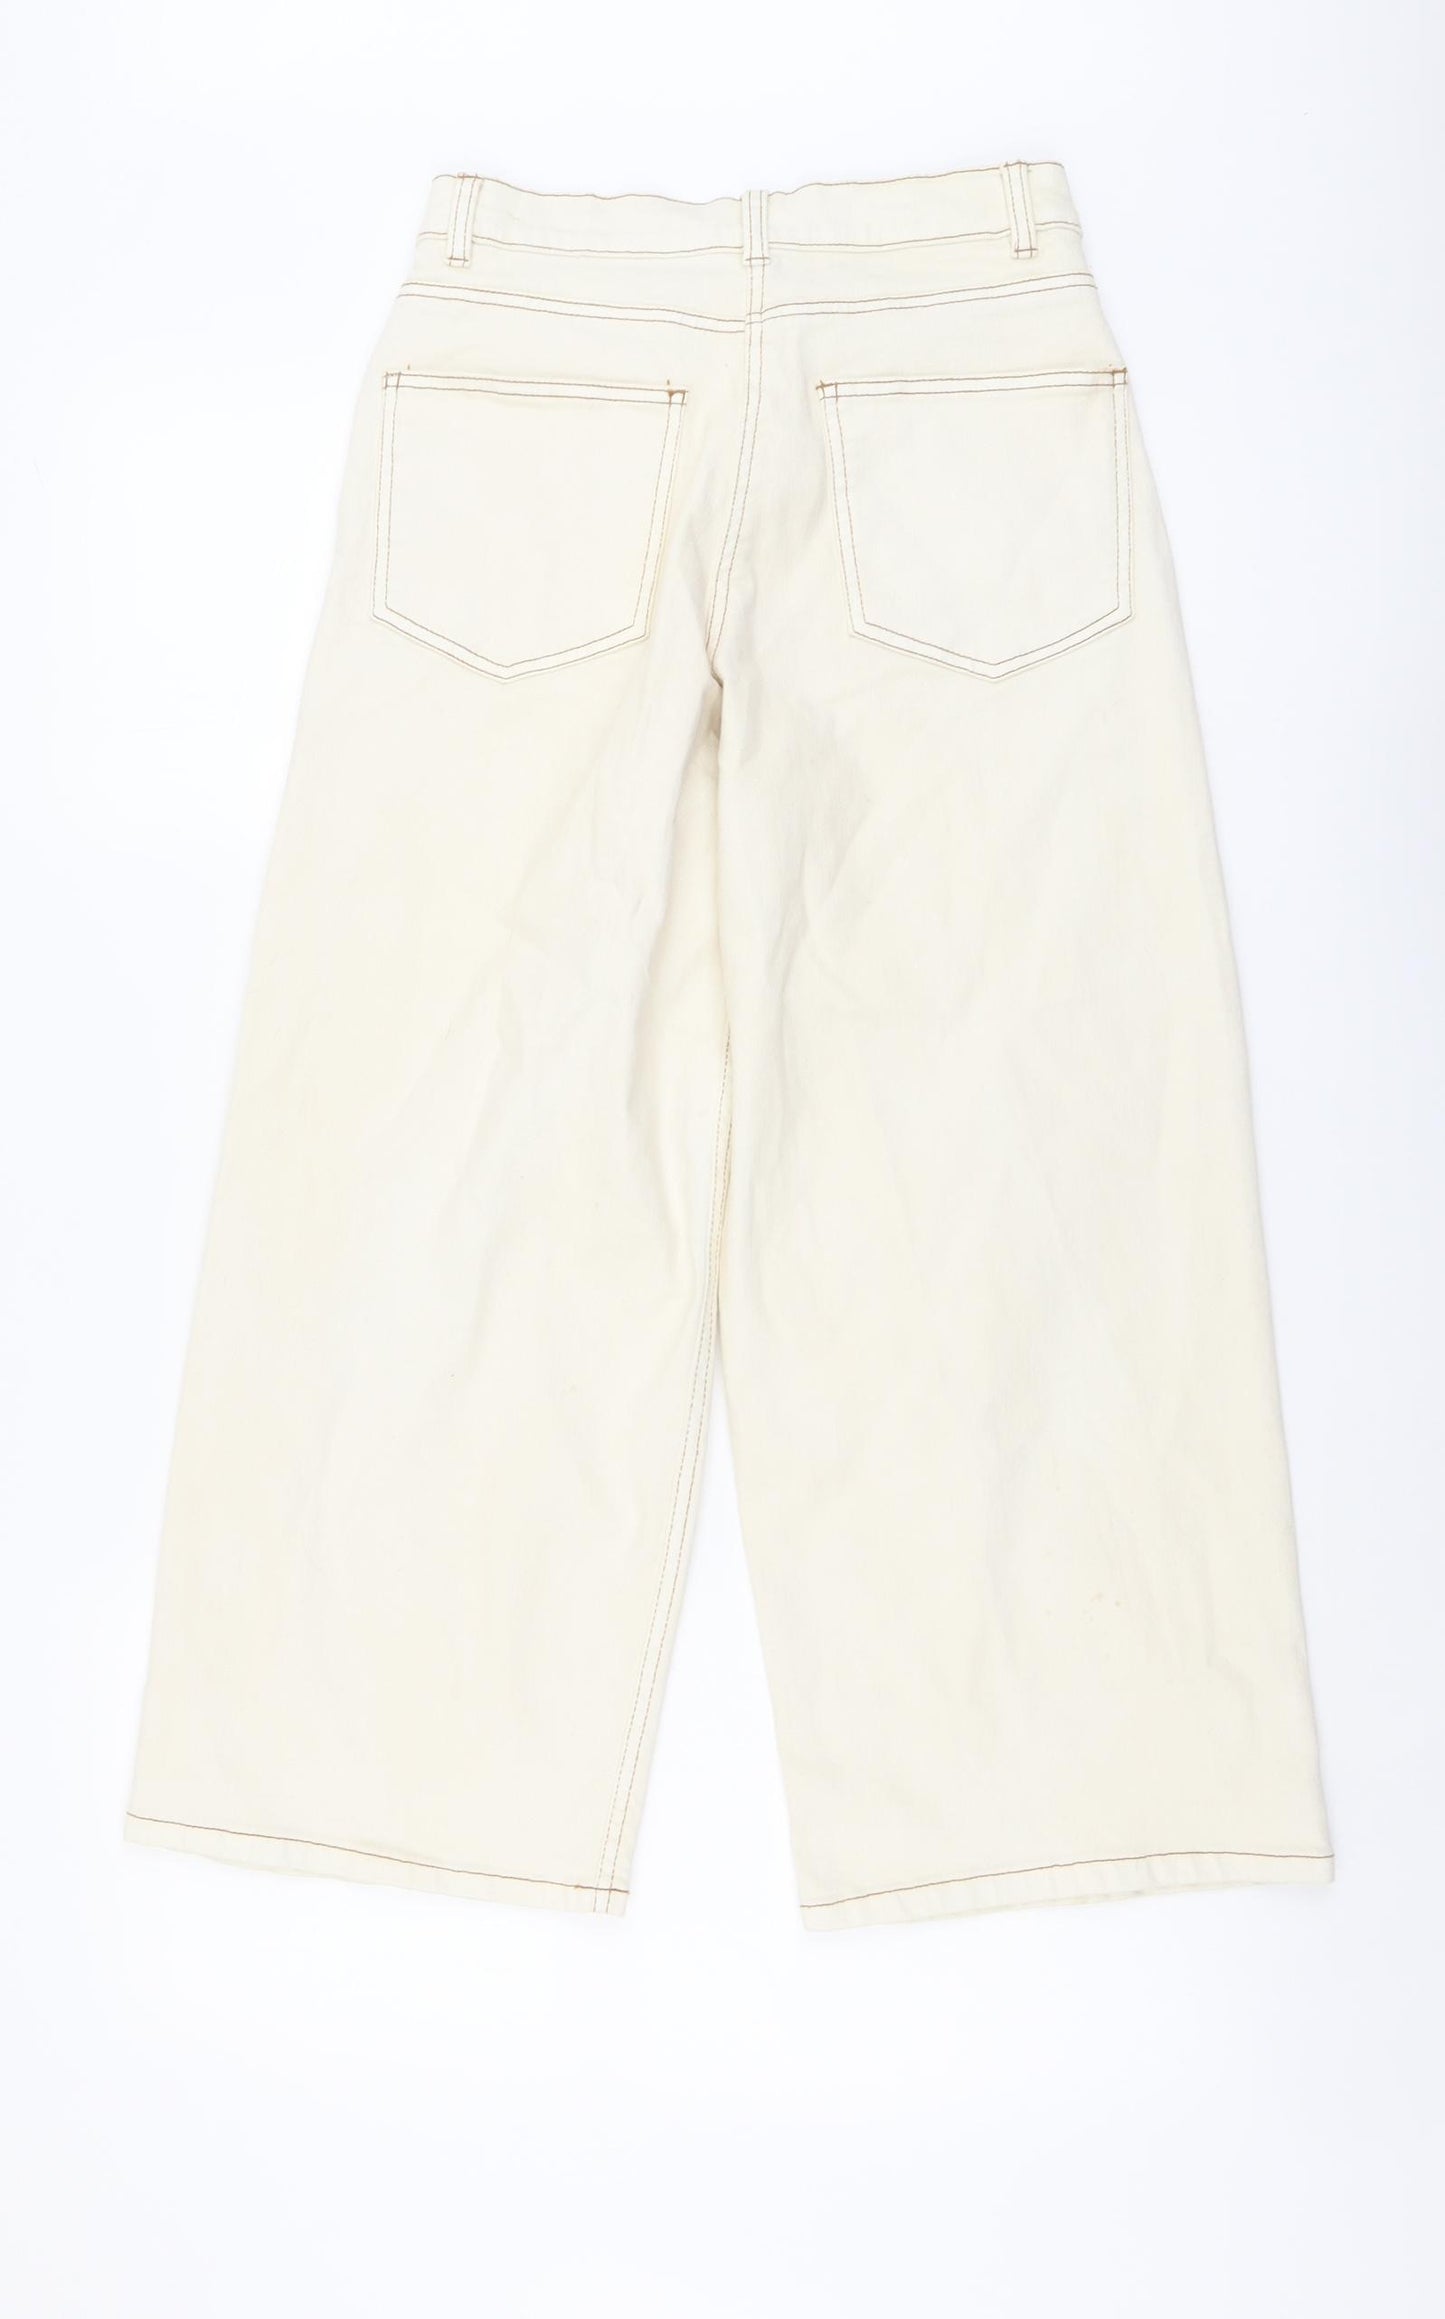 M&Co Girls Beige Cotton Wide-Leg Jeans Size 13 Years Regular Button